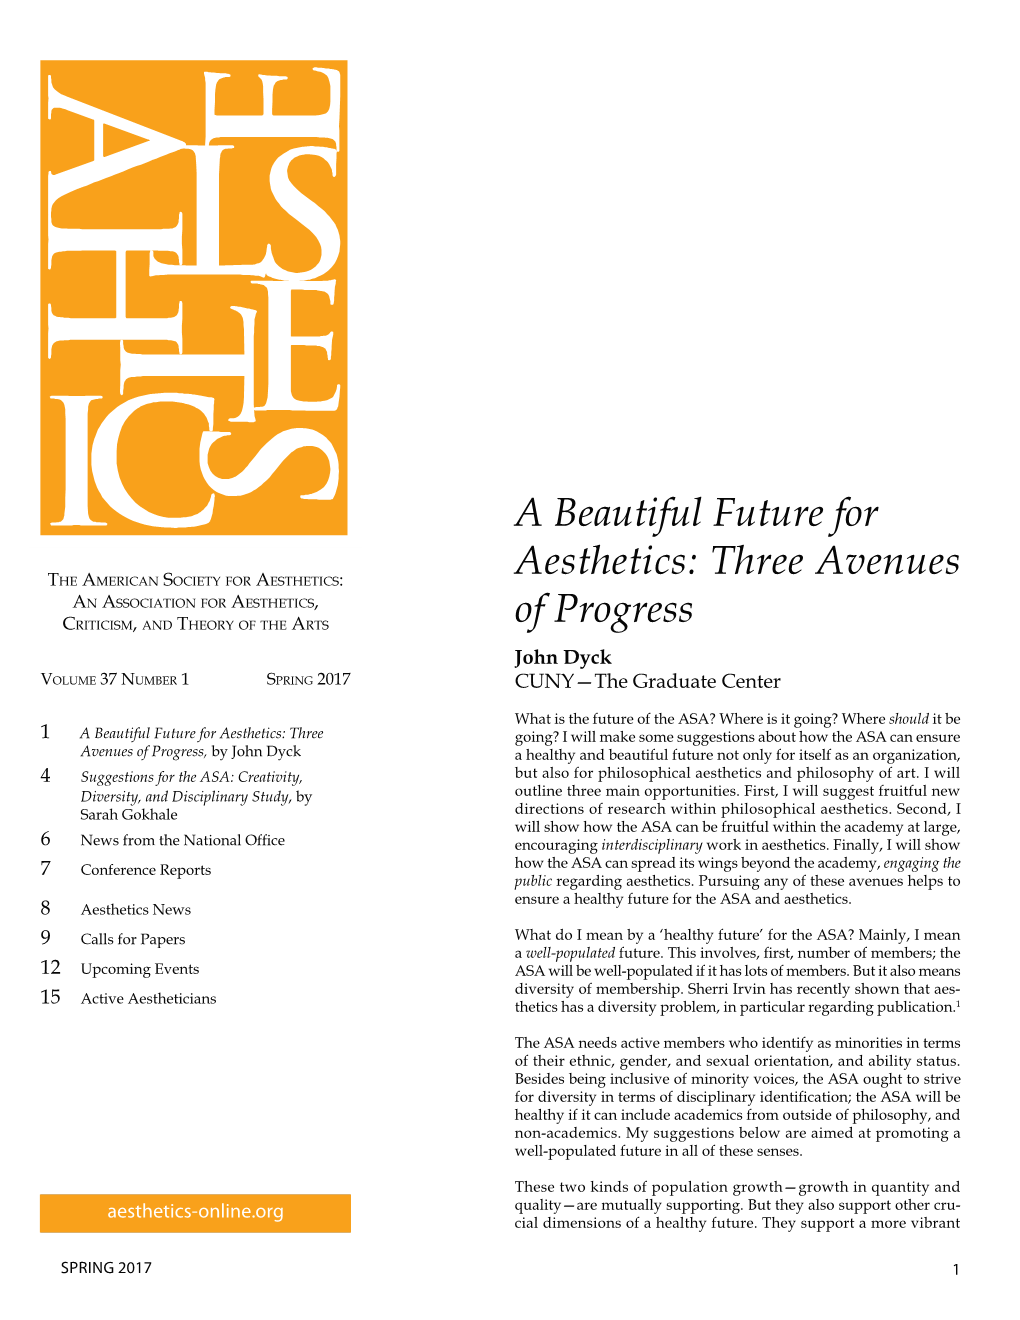 A Beautiful Future for Aesthetics: Three Avenues of Progress